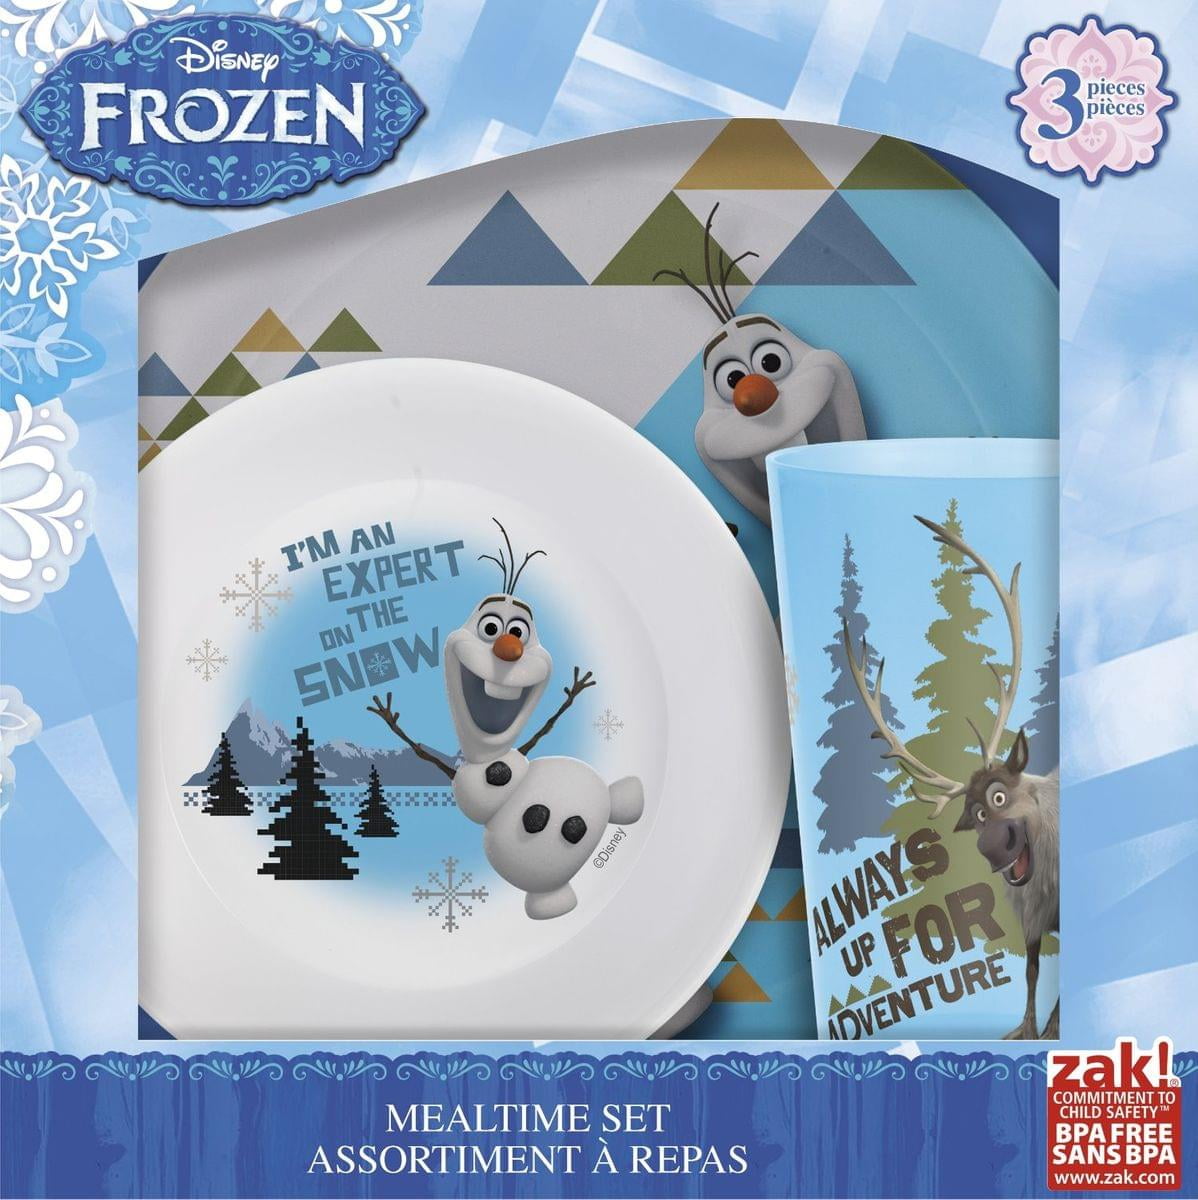 Bowl & Beaker Elsa Anna & Olaf Details about   Disney Frozen Children's Meal Time Set Plate 